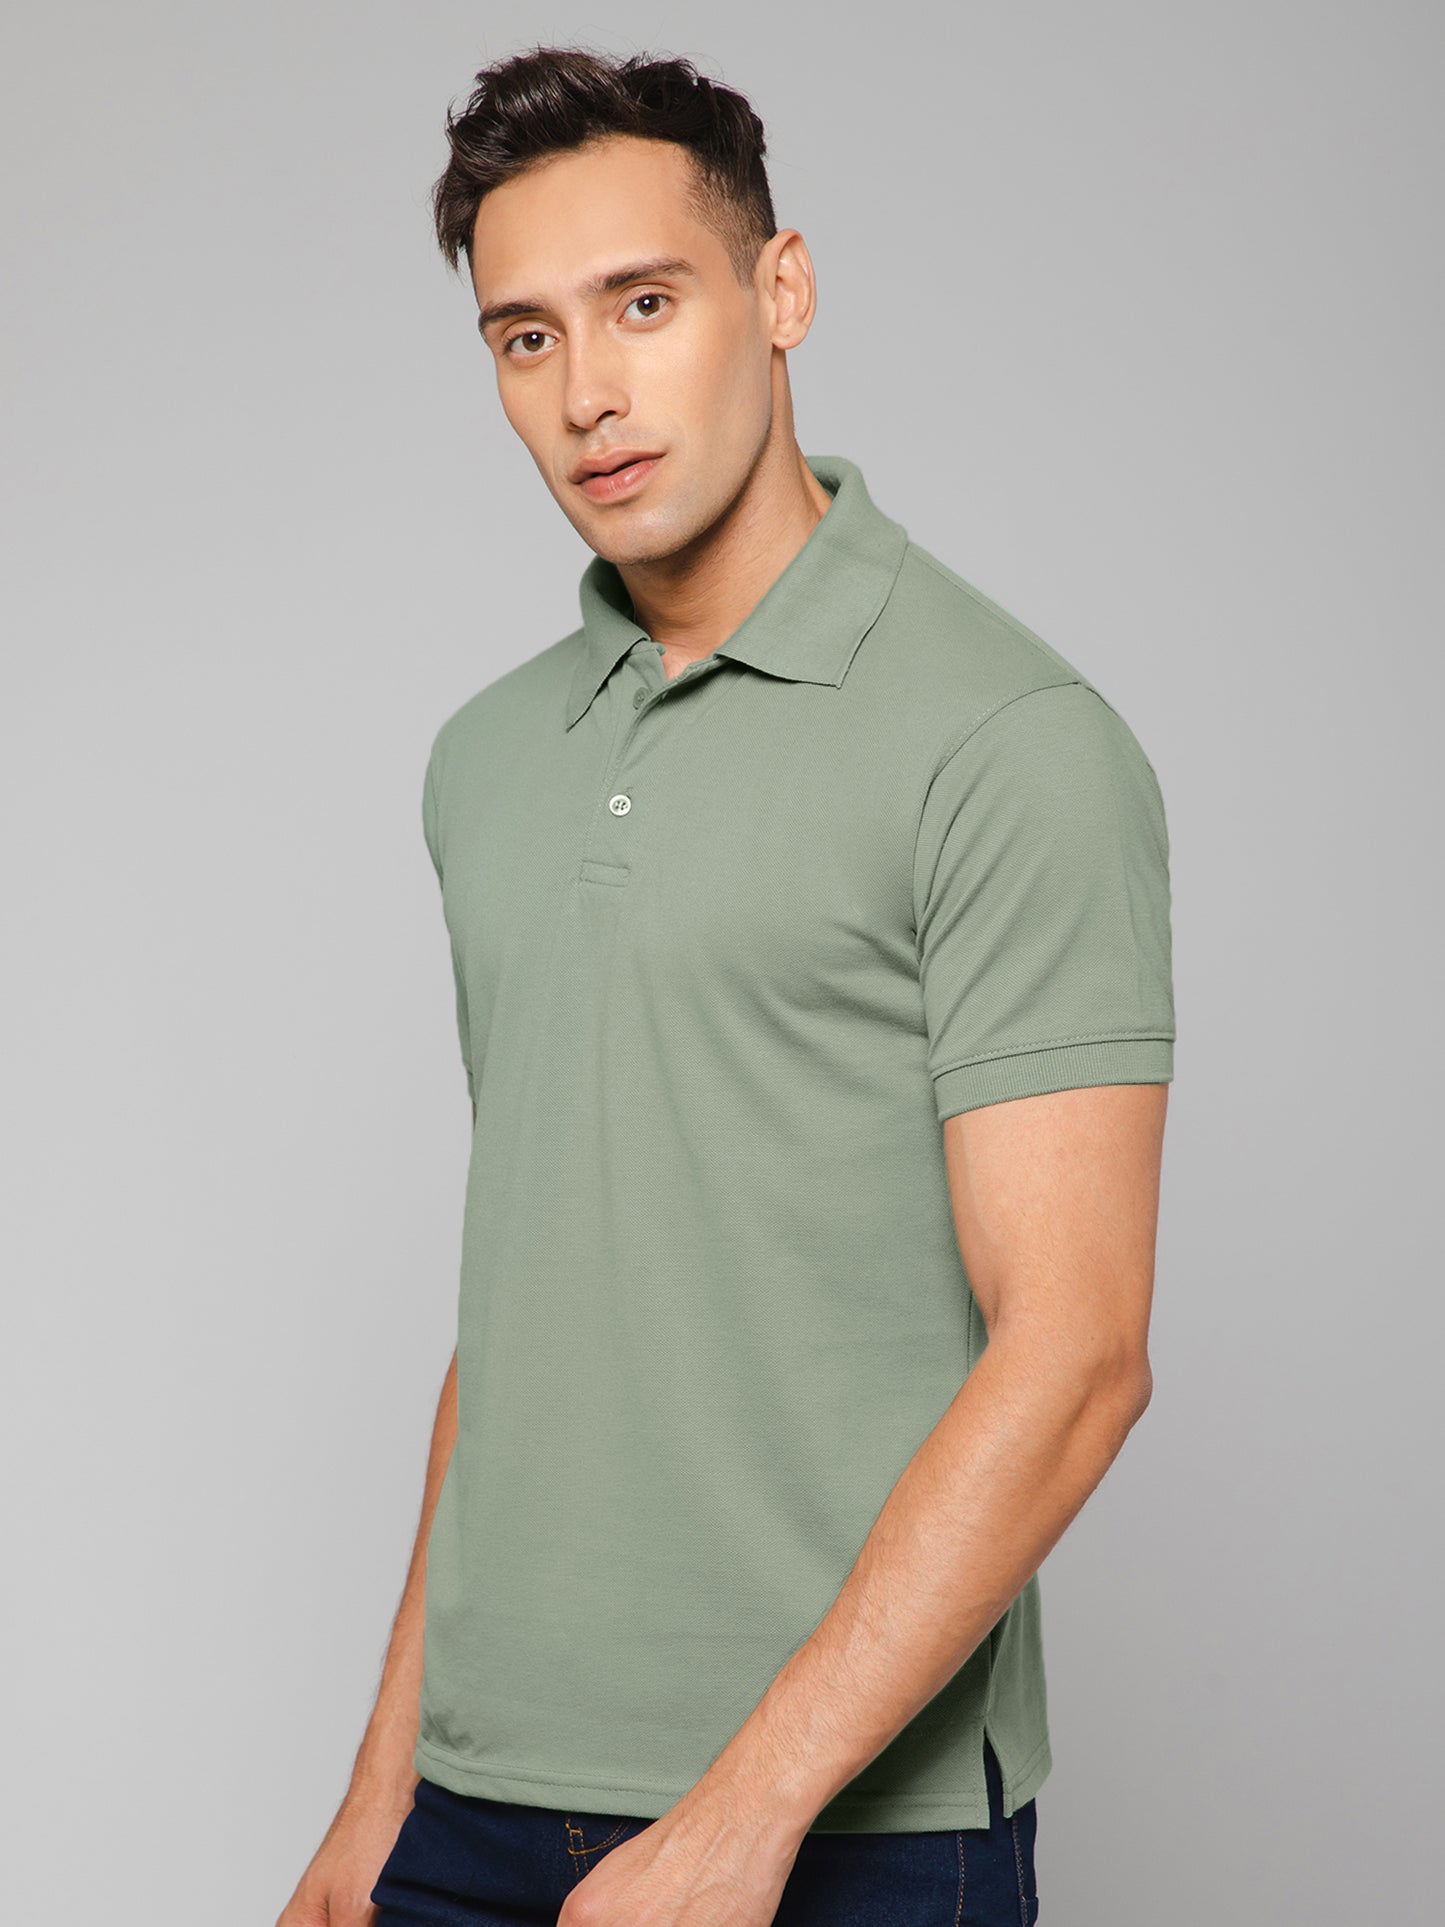 Pistachio Green Polo T-shirt